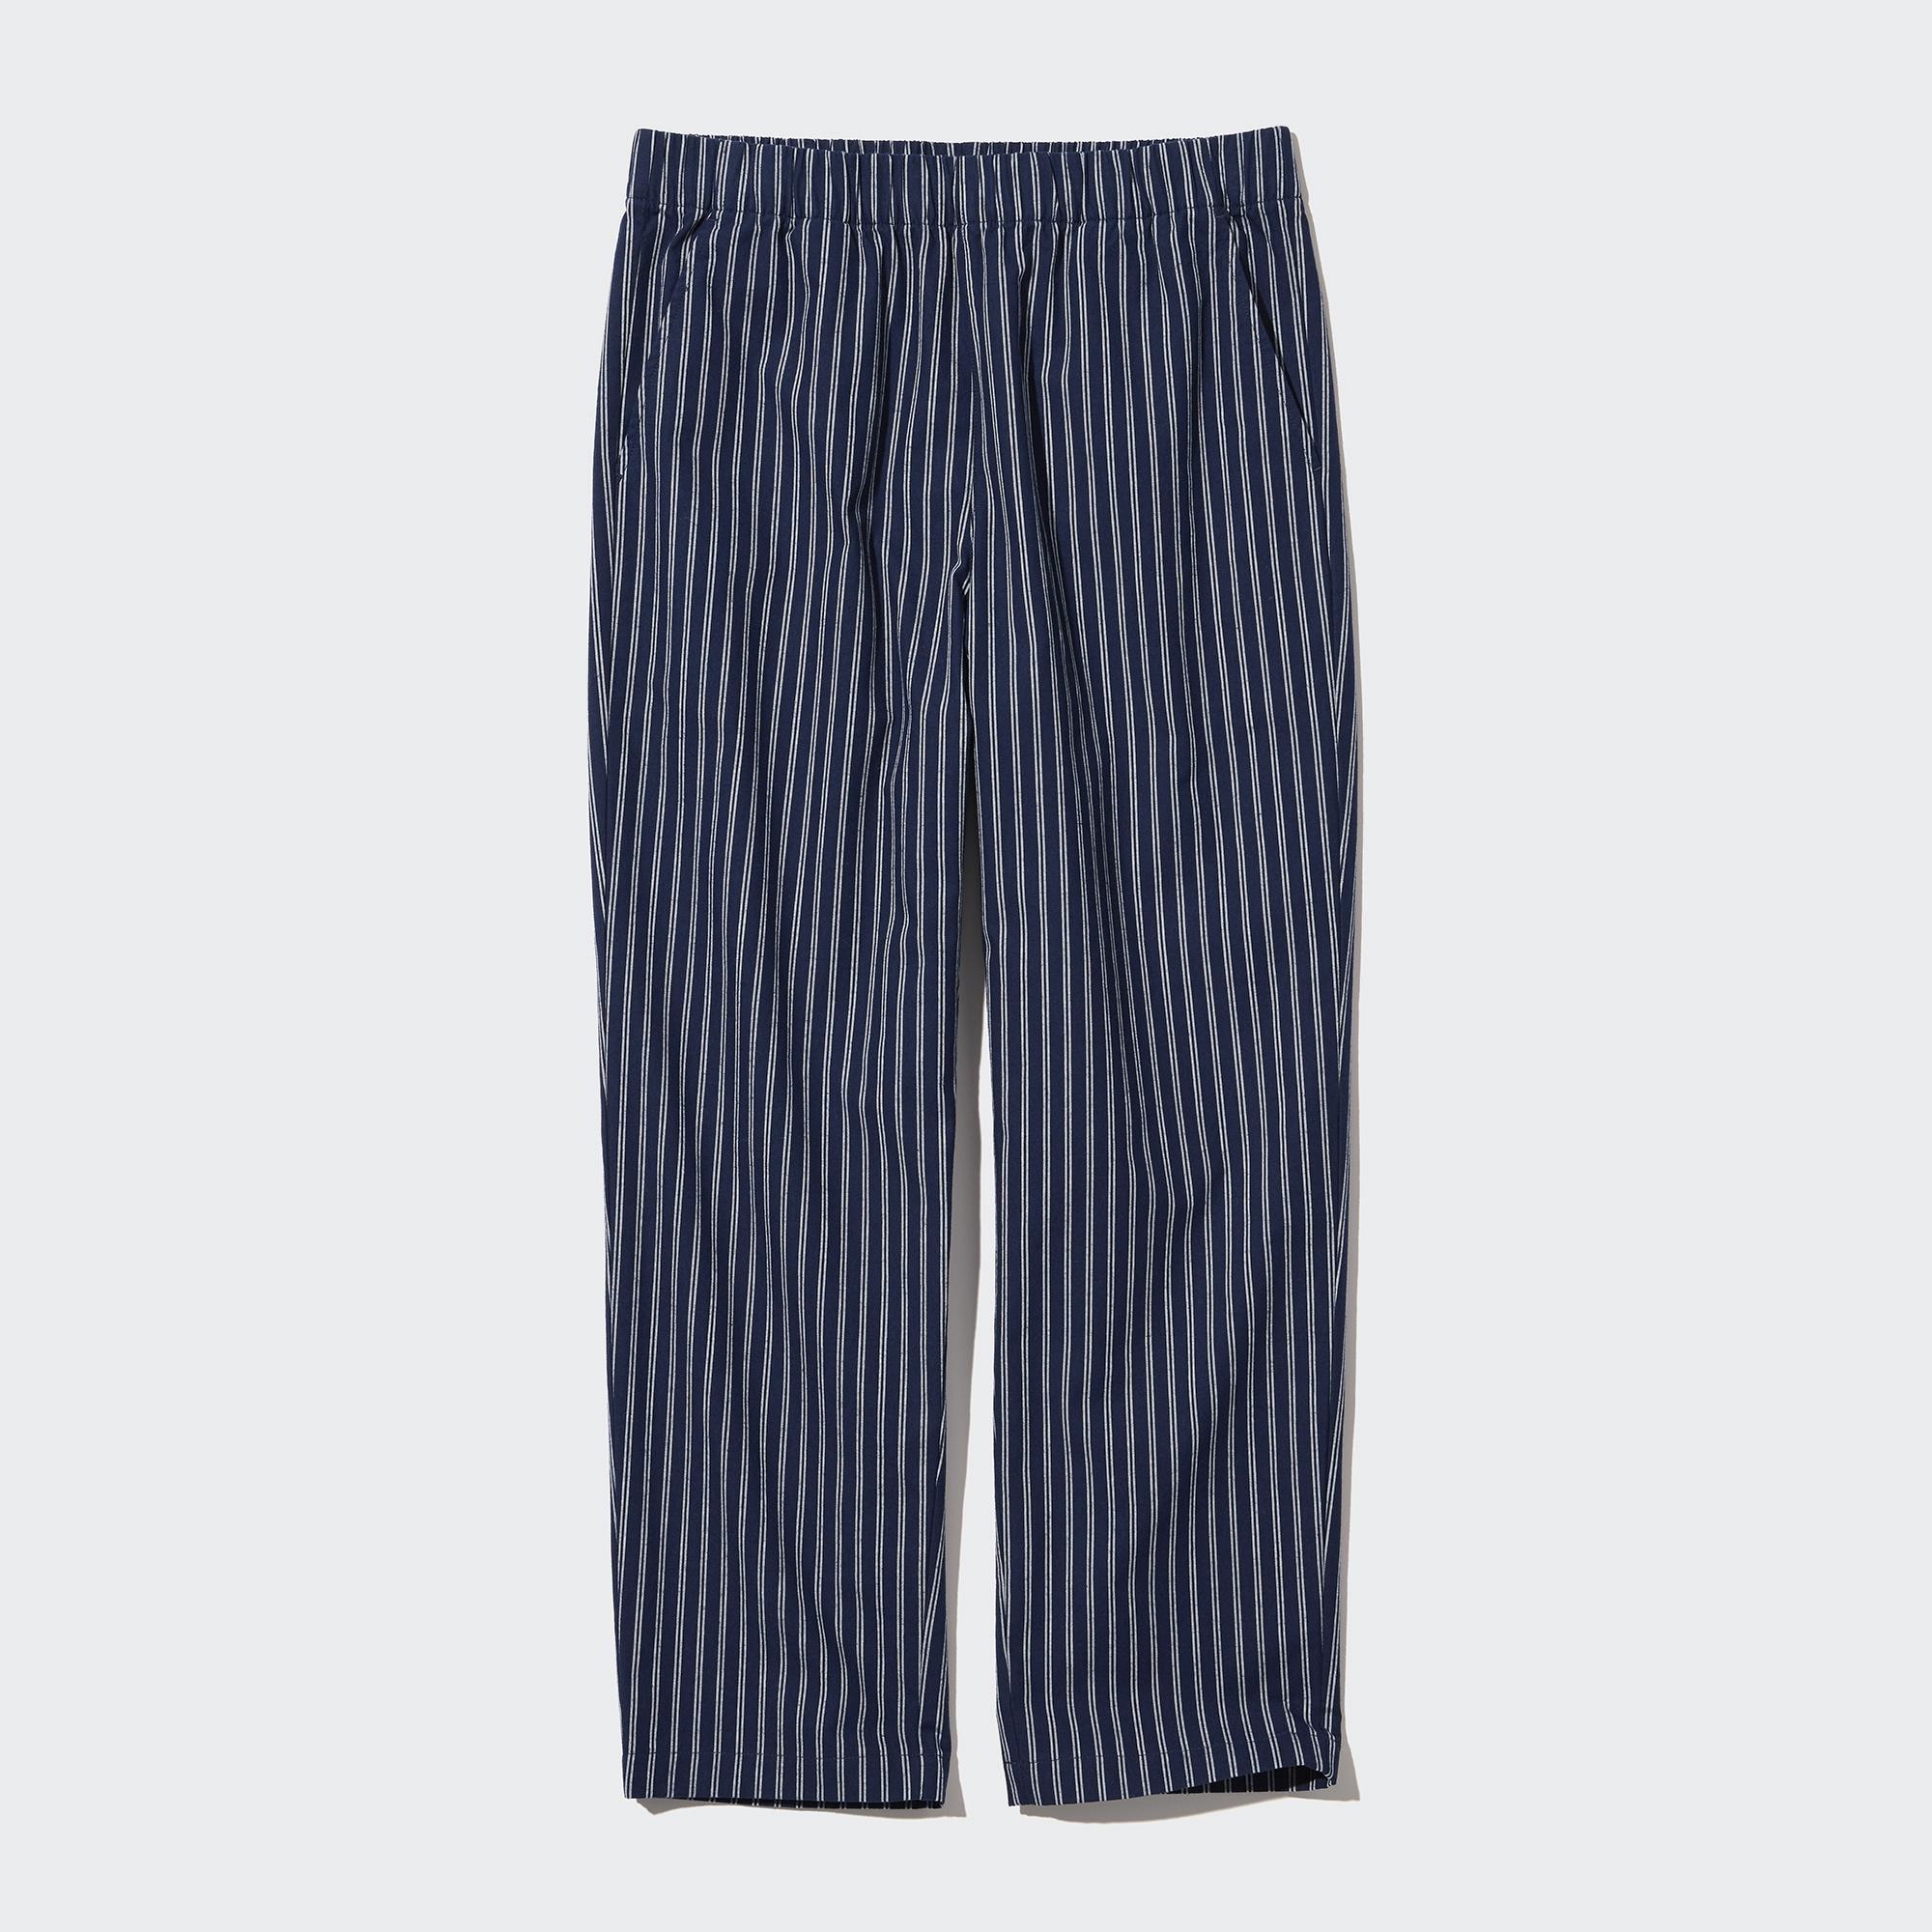 Uniqlo Dress Pants Womens 30x30.5 Navy Blue Pinstripe Heat Tech Straight  Work